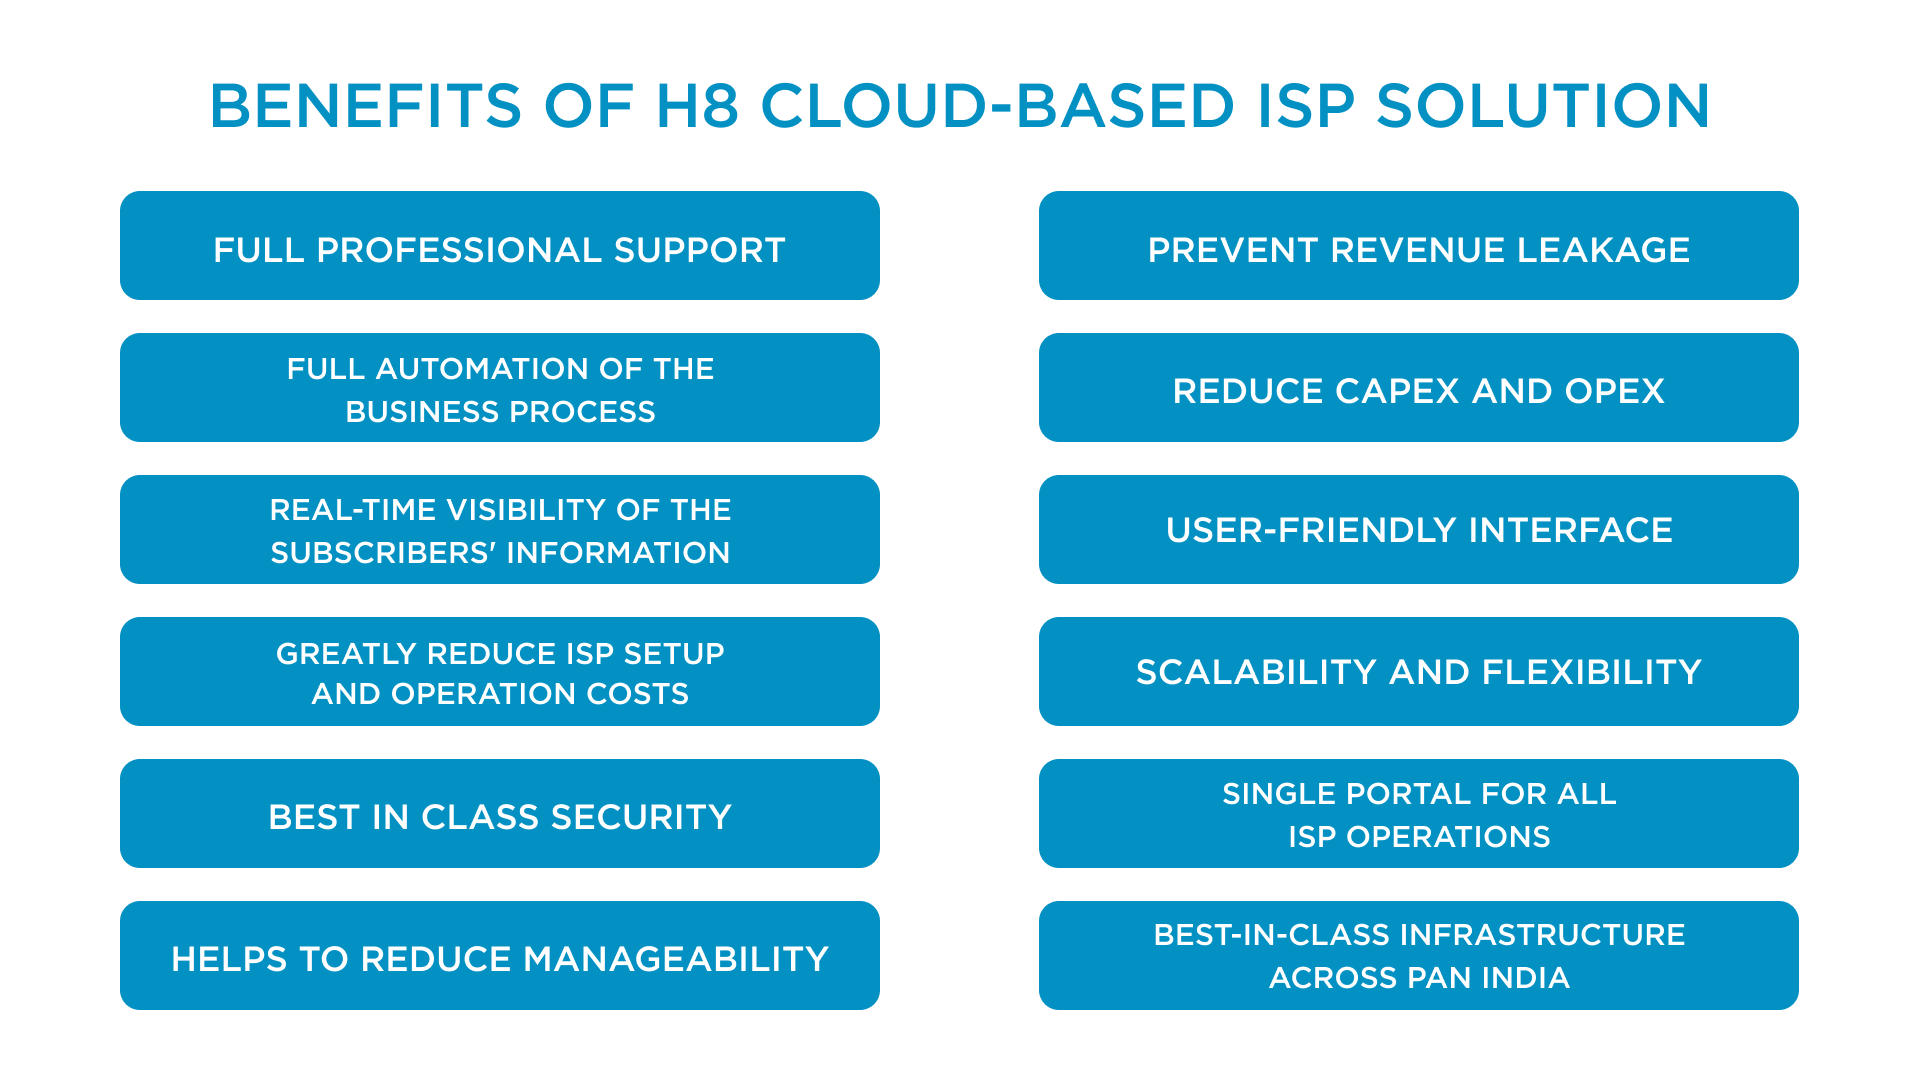 Benefits of H8 Cloud-based ISP Solution